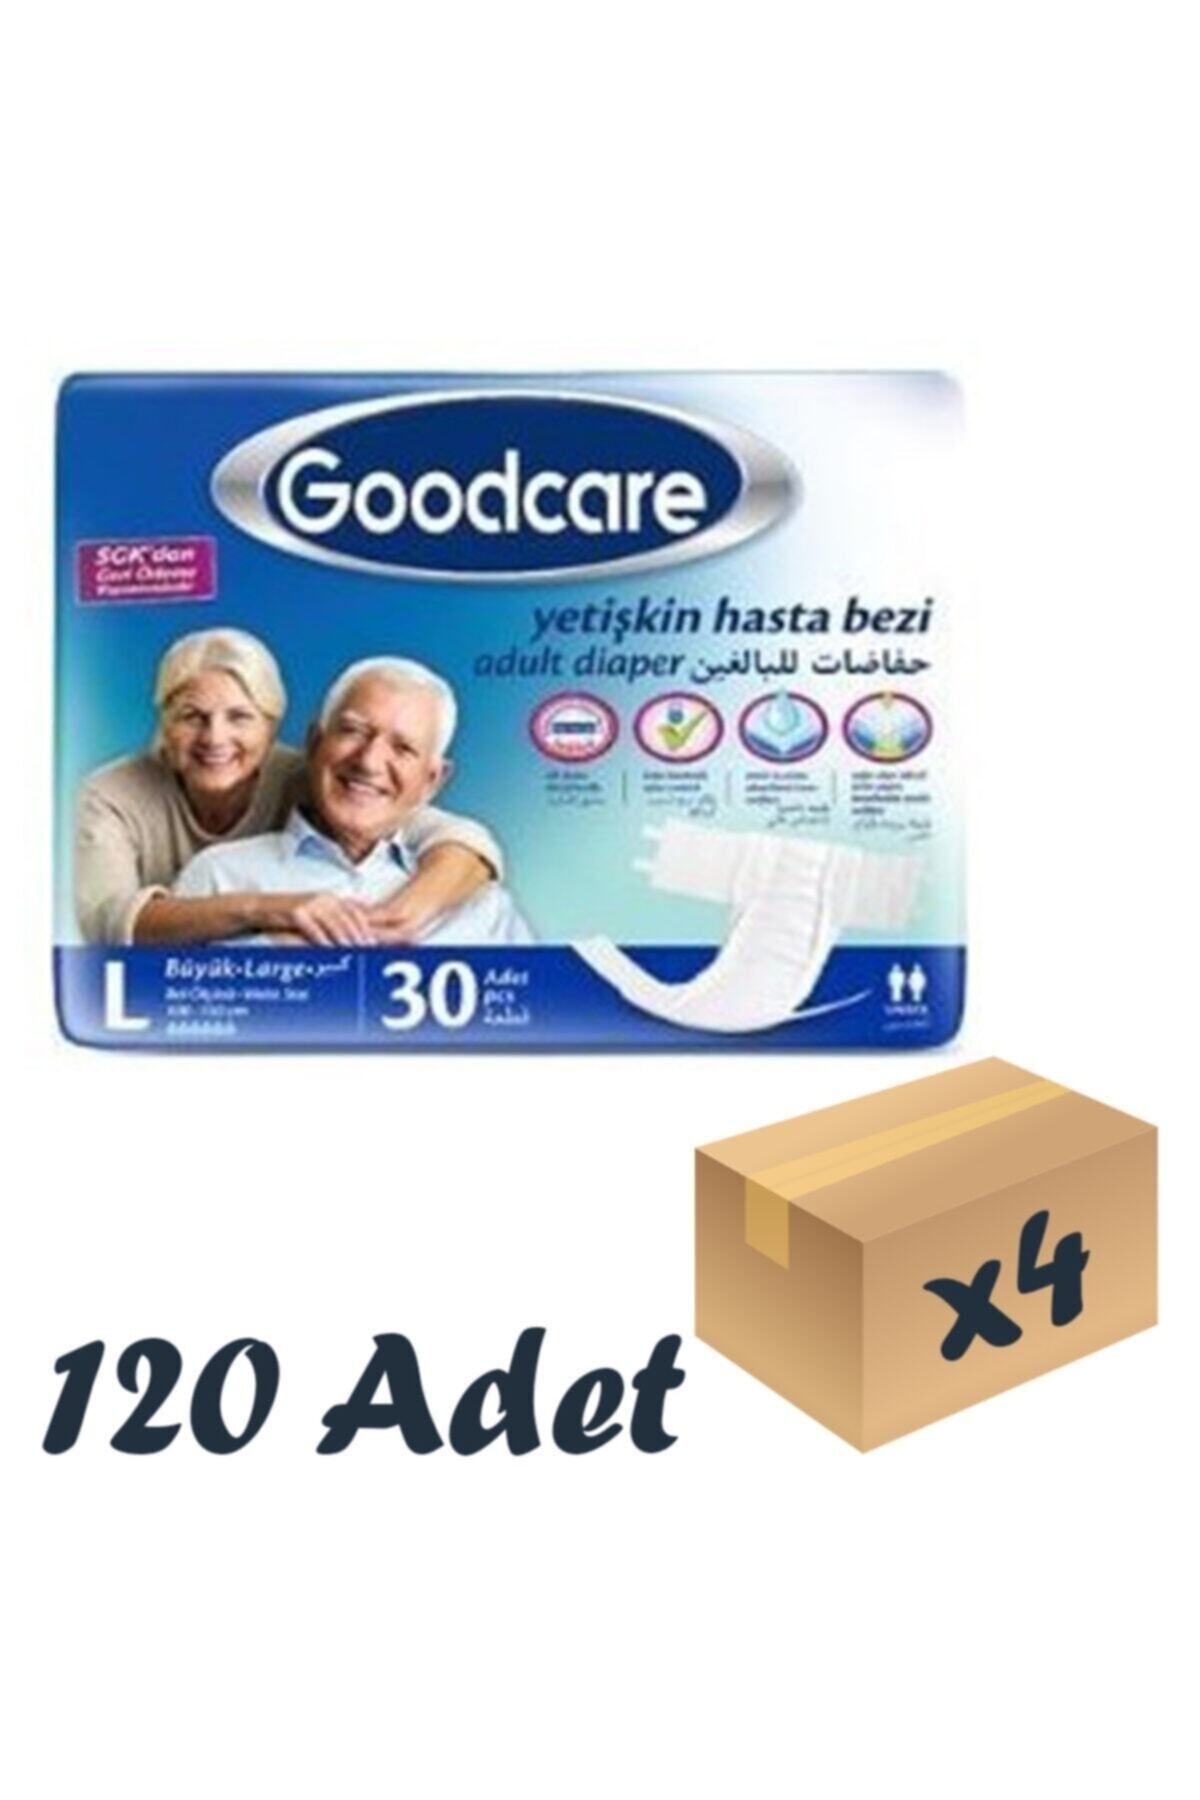 Goodcare Bel Bantlı Yetişkin Hasta Bezi Large 30'lu 4 Paket 120 Adet